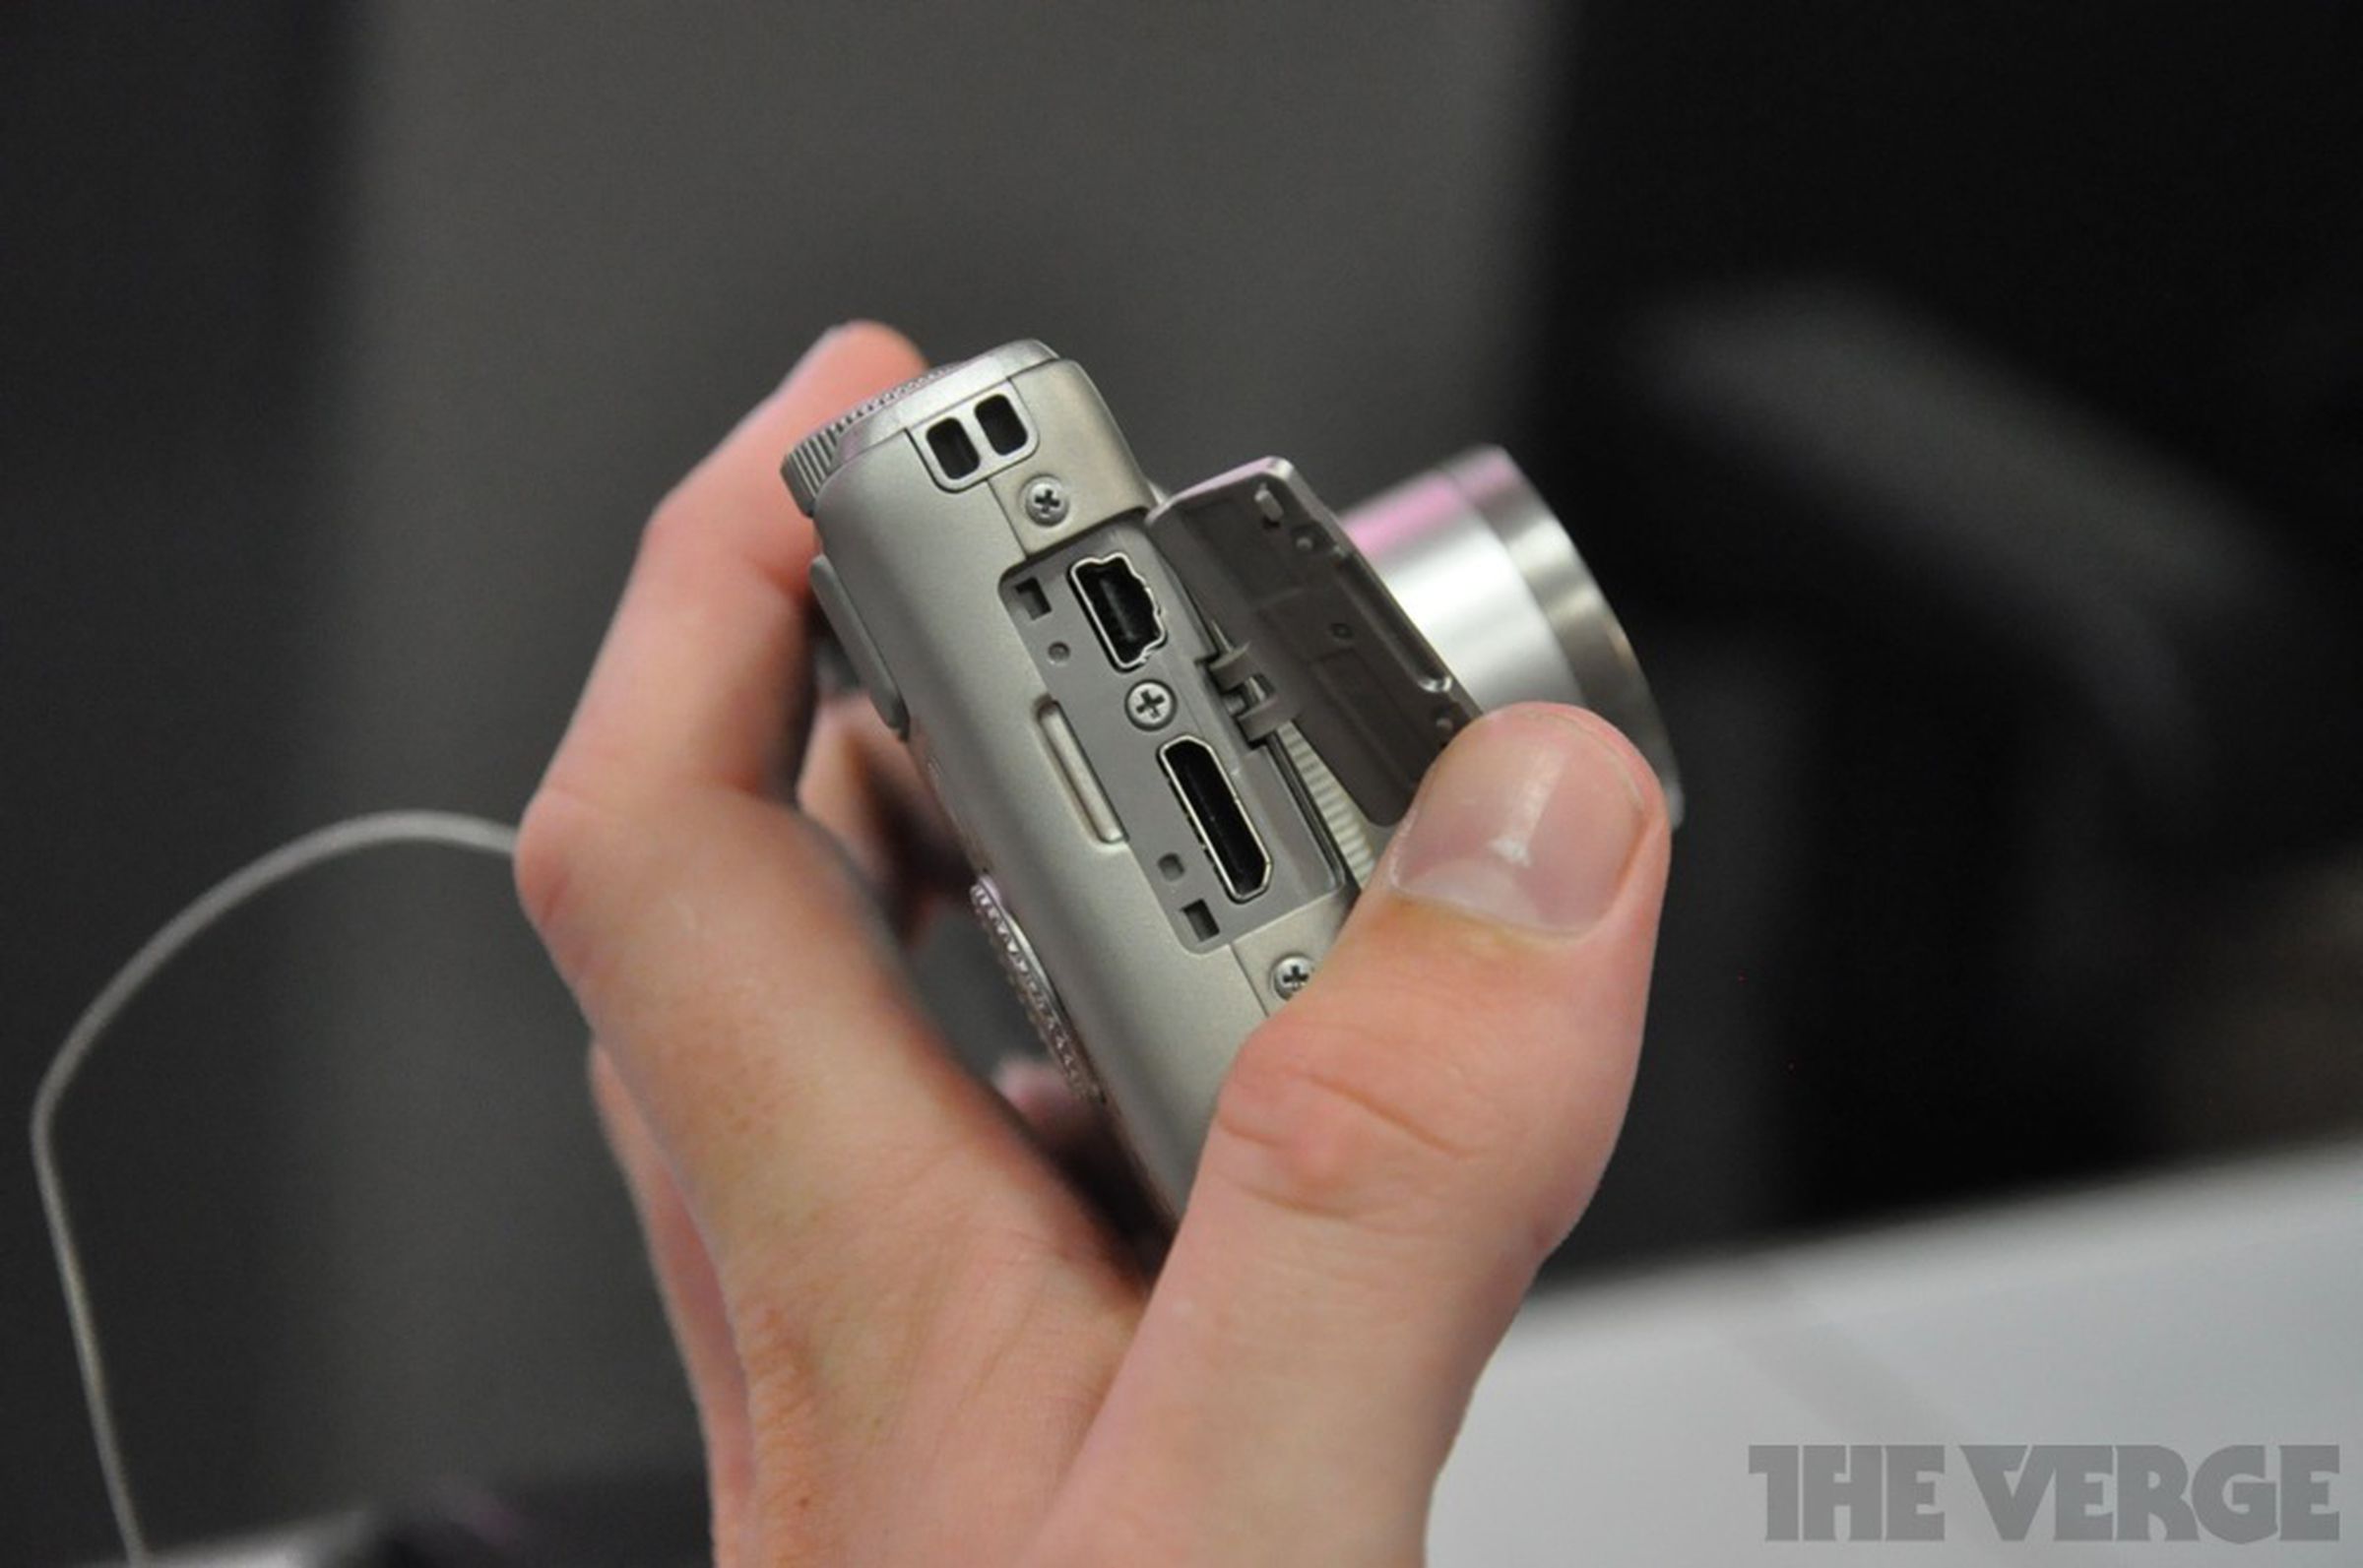 Canon PowerShot S100 hands-on photos